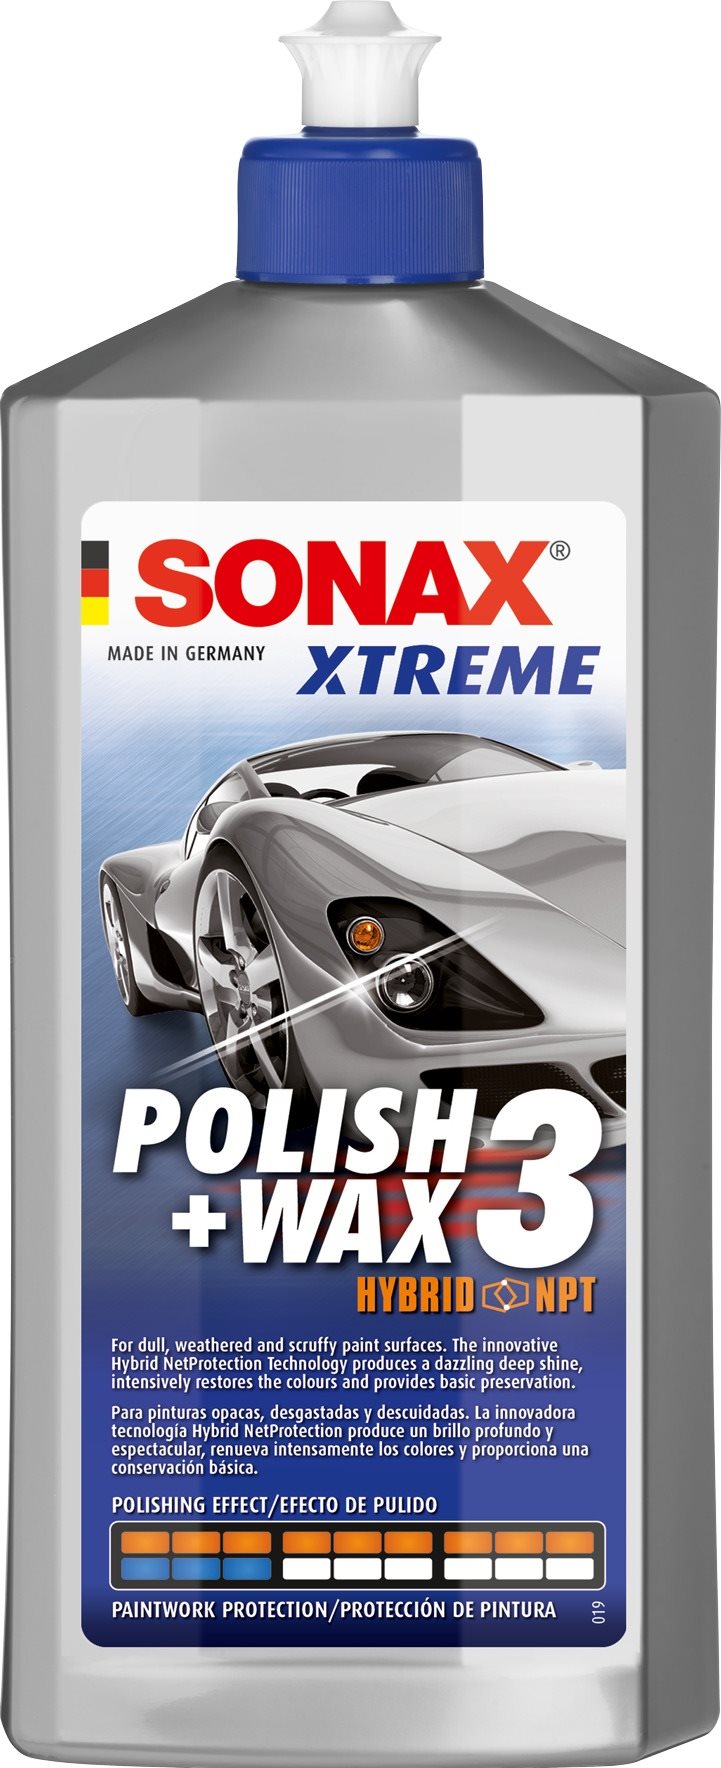 SONAX Xtreme Polish & Wax 3 - 500ml